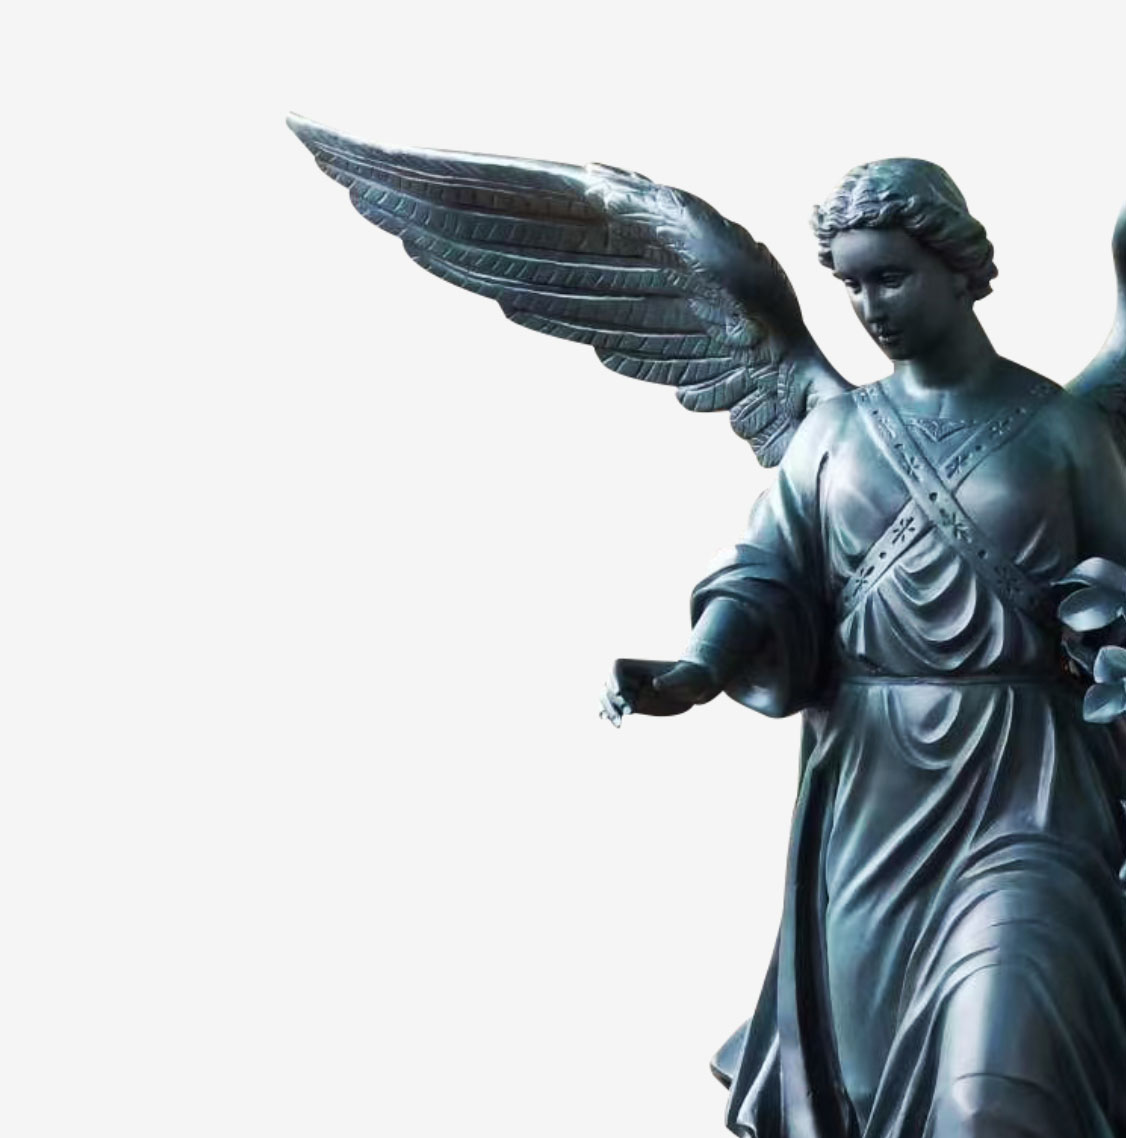 Large bronze statue of angel, bronze statues for sale, angel bronze statue